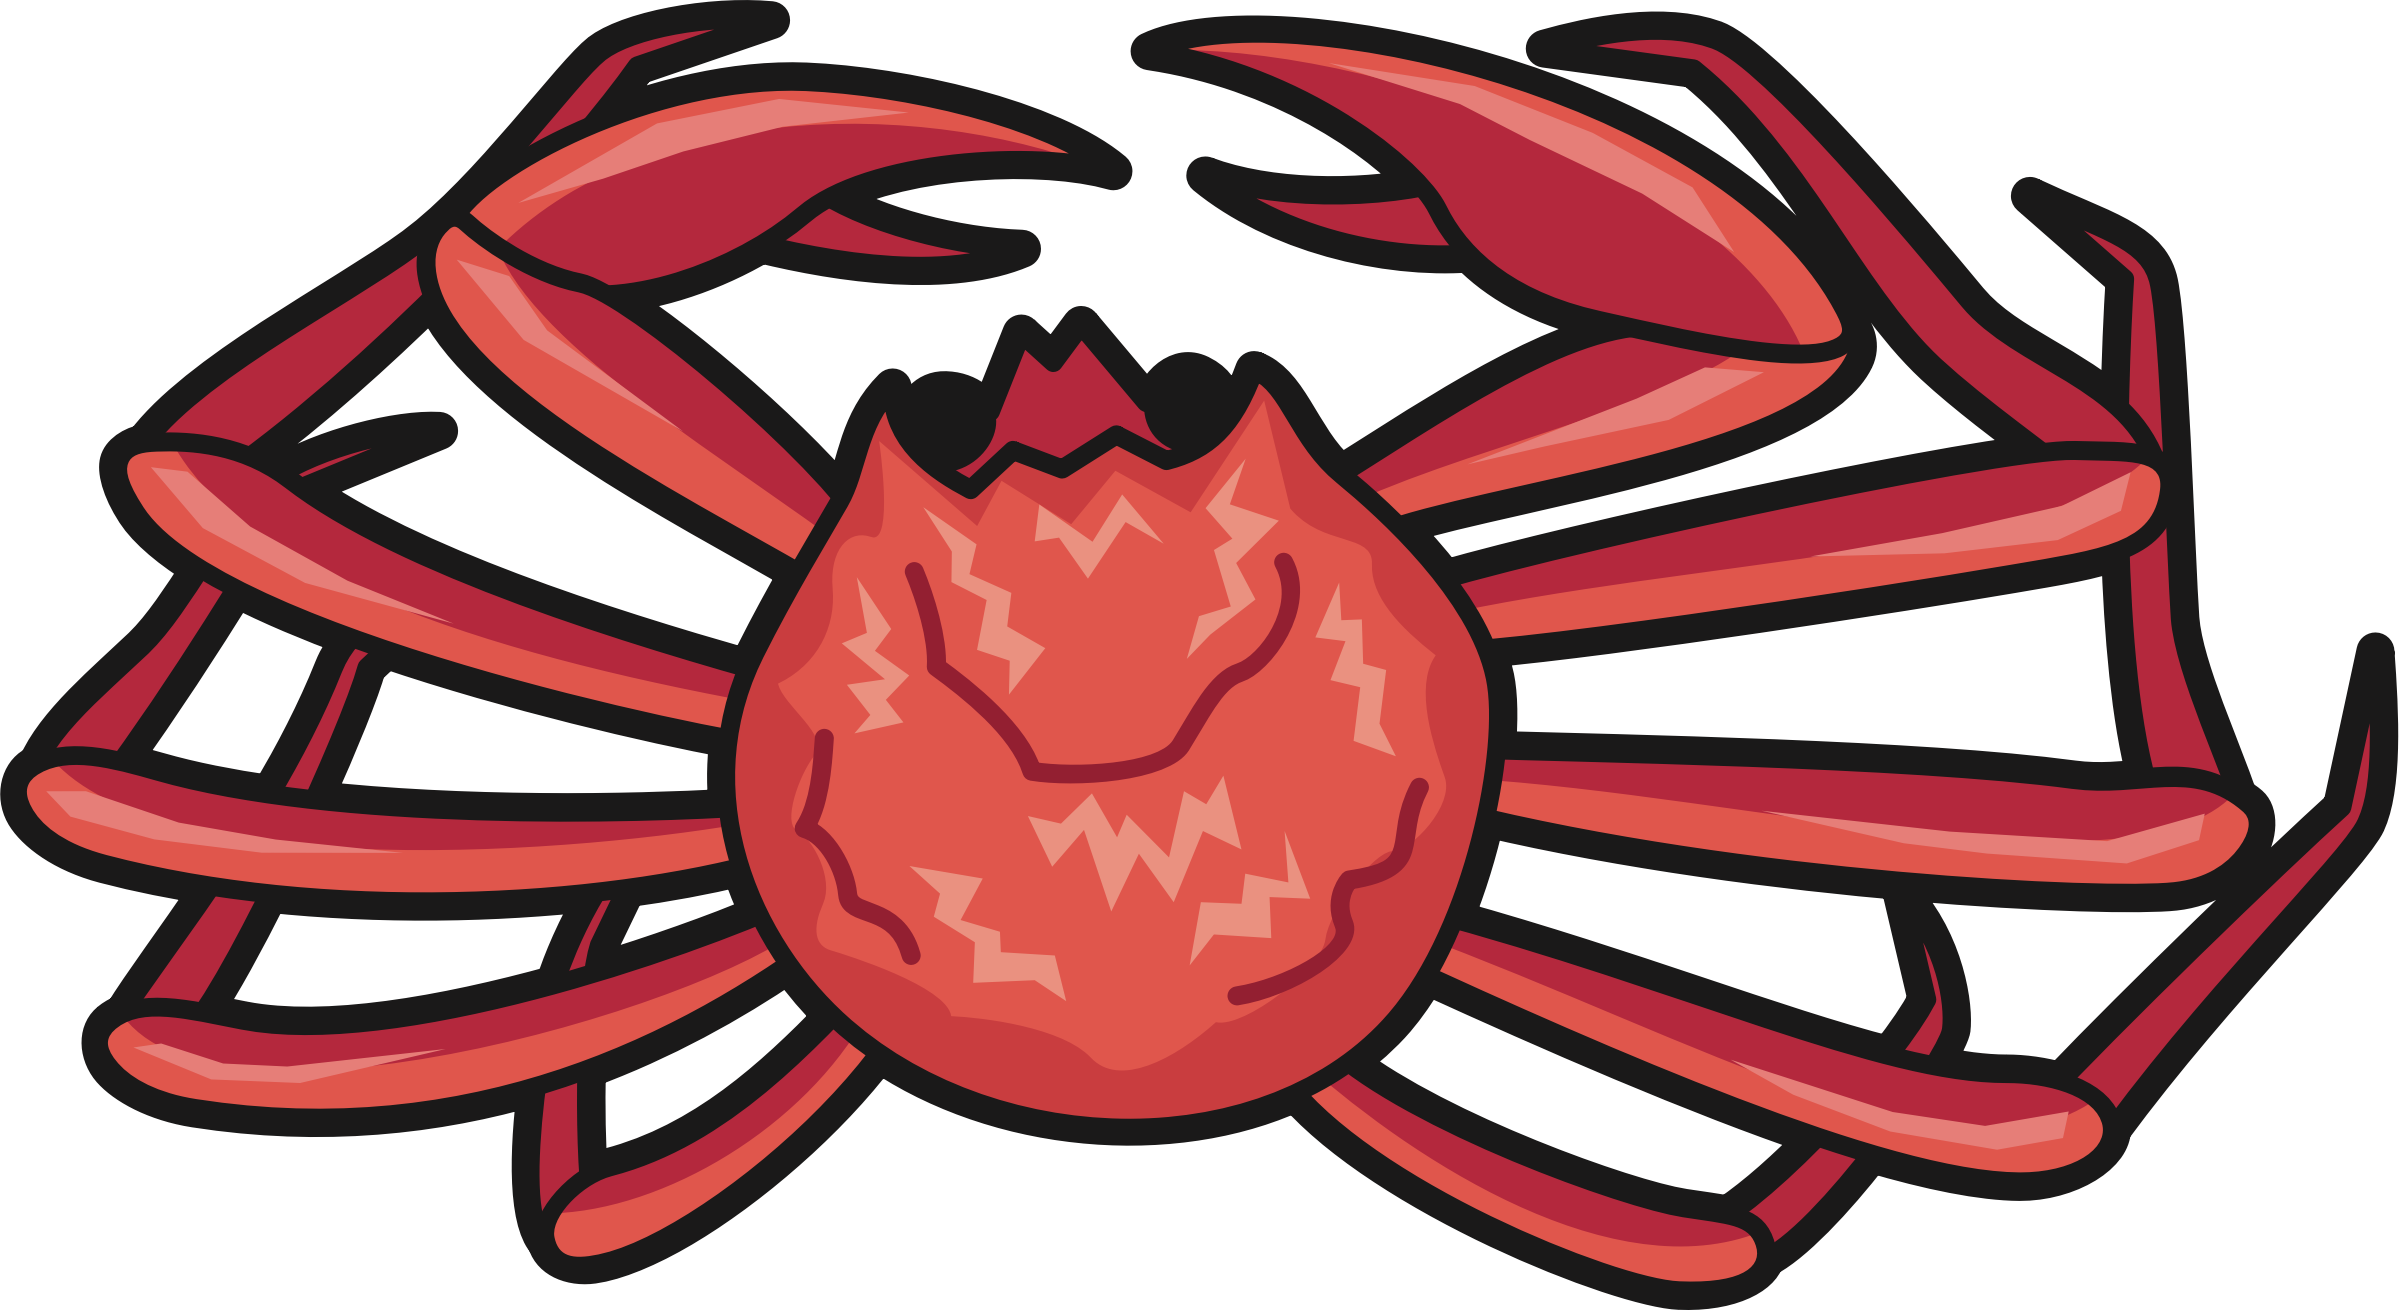 Big Image - Snow Crab (2399x1310)